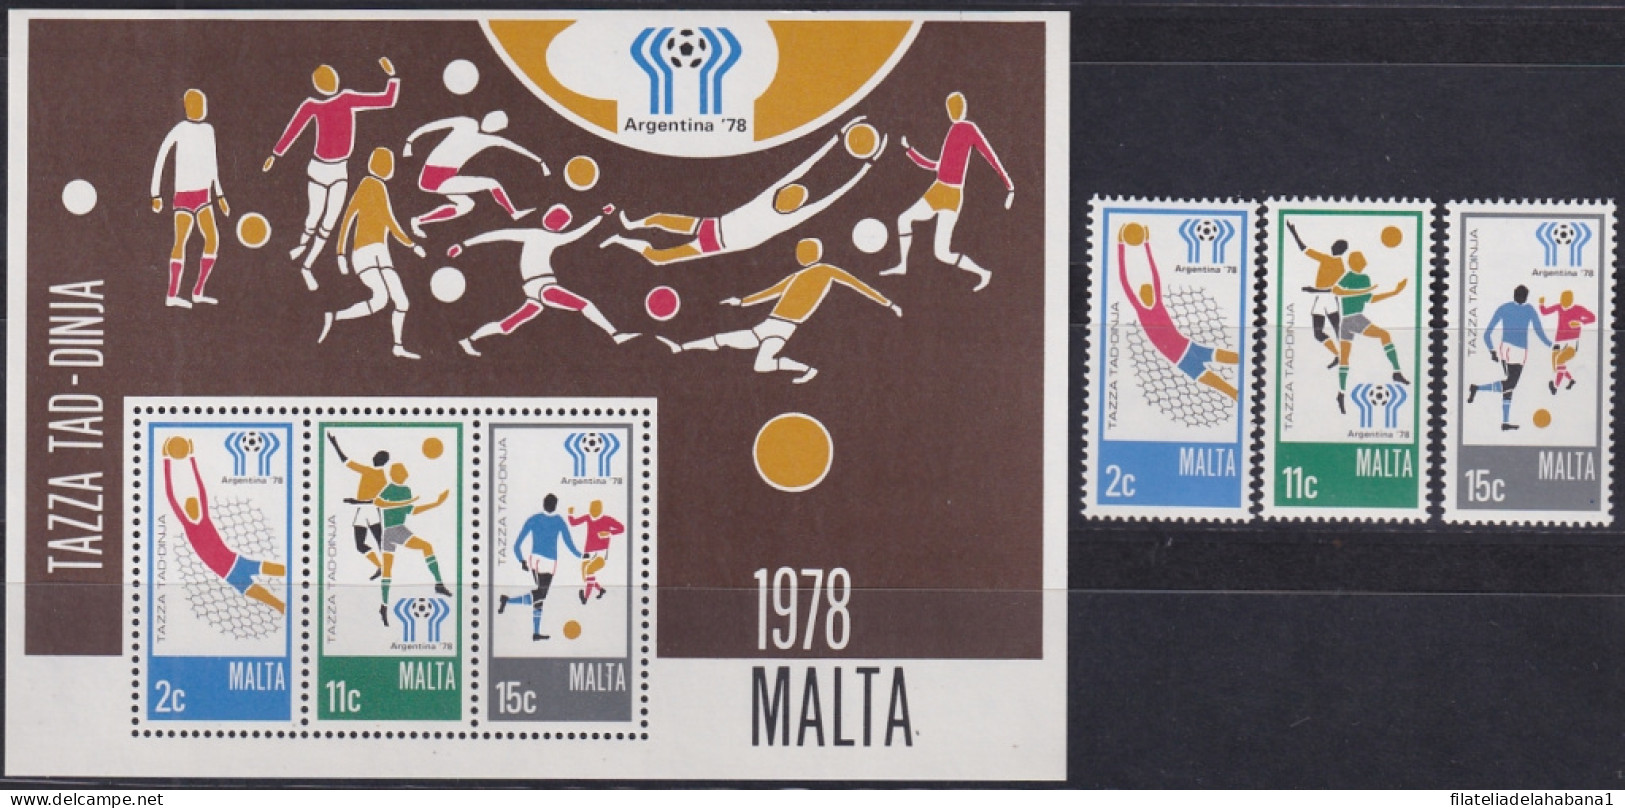 F-EX47677 MALTA MNH 1978 WORLD FOOTBALL SOCCER CHAMPIONSHIP.  - 1978 – Argentine